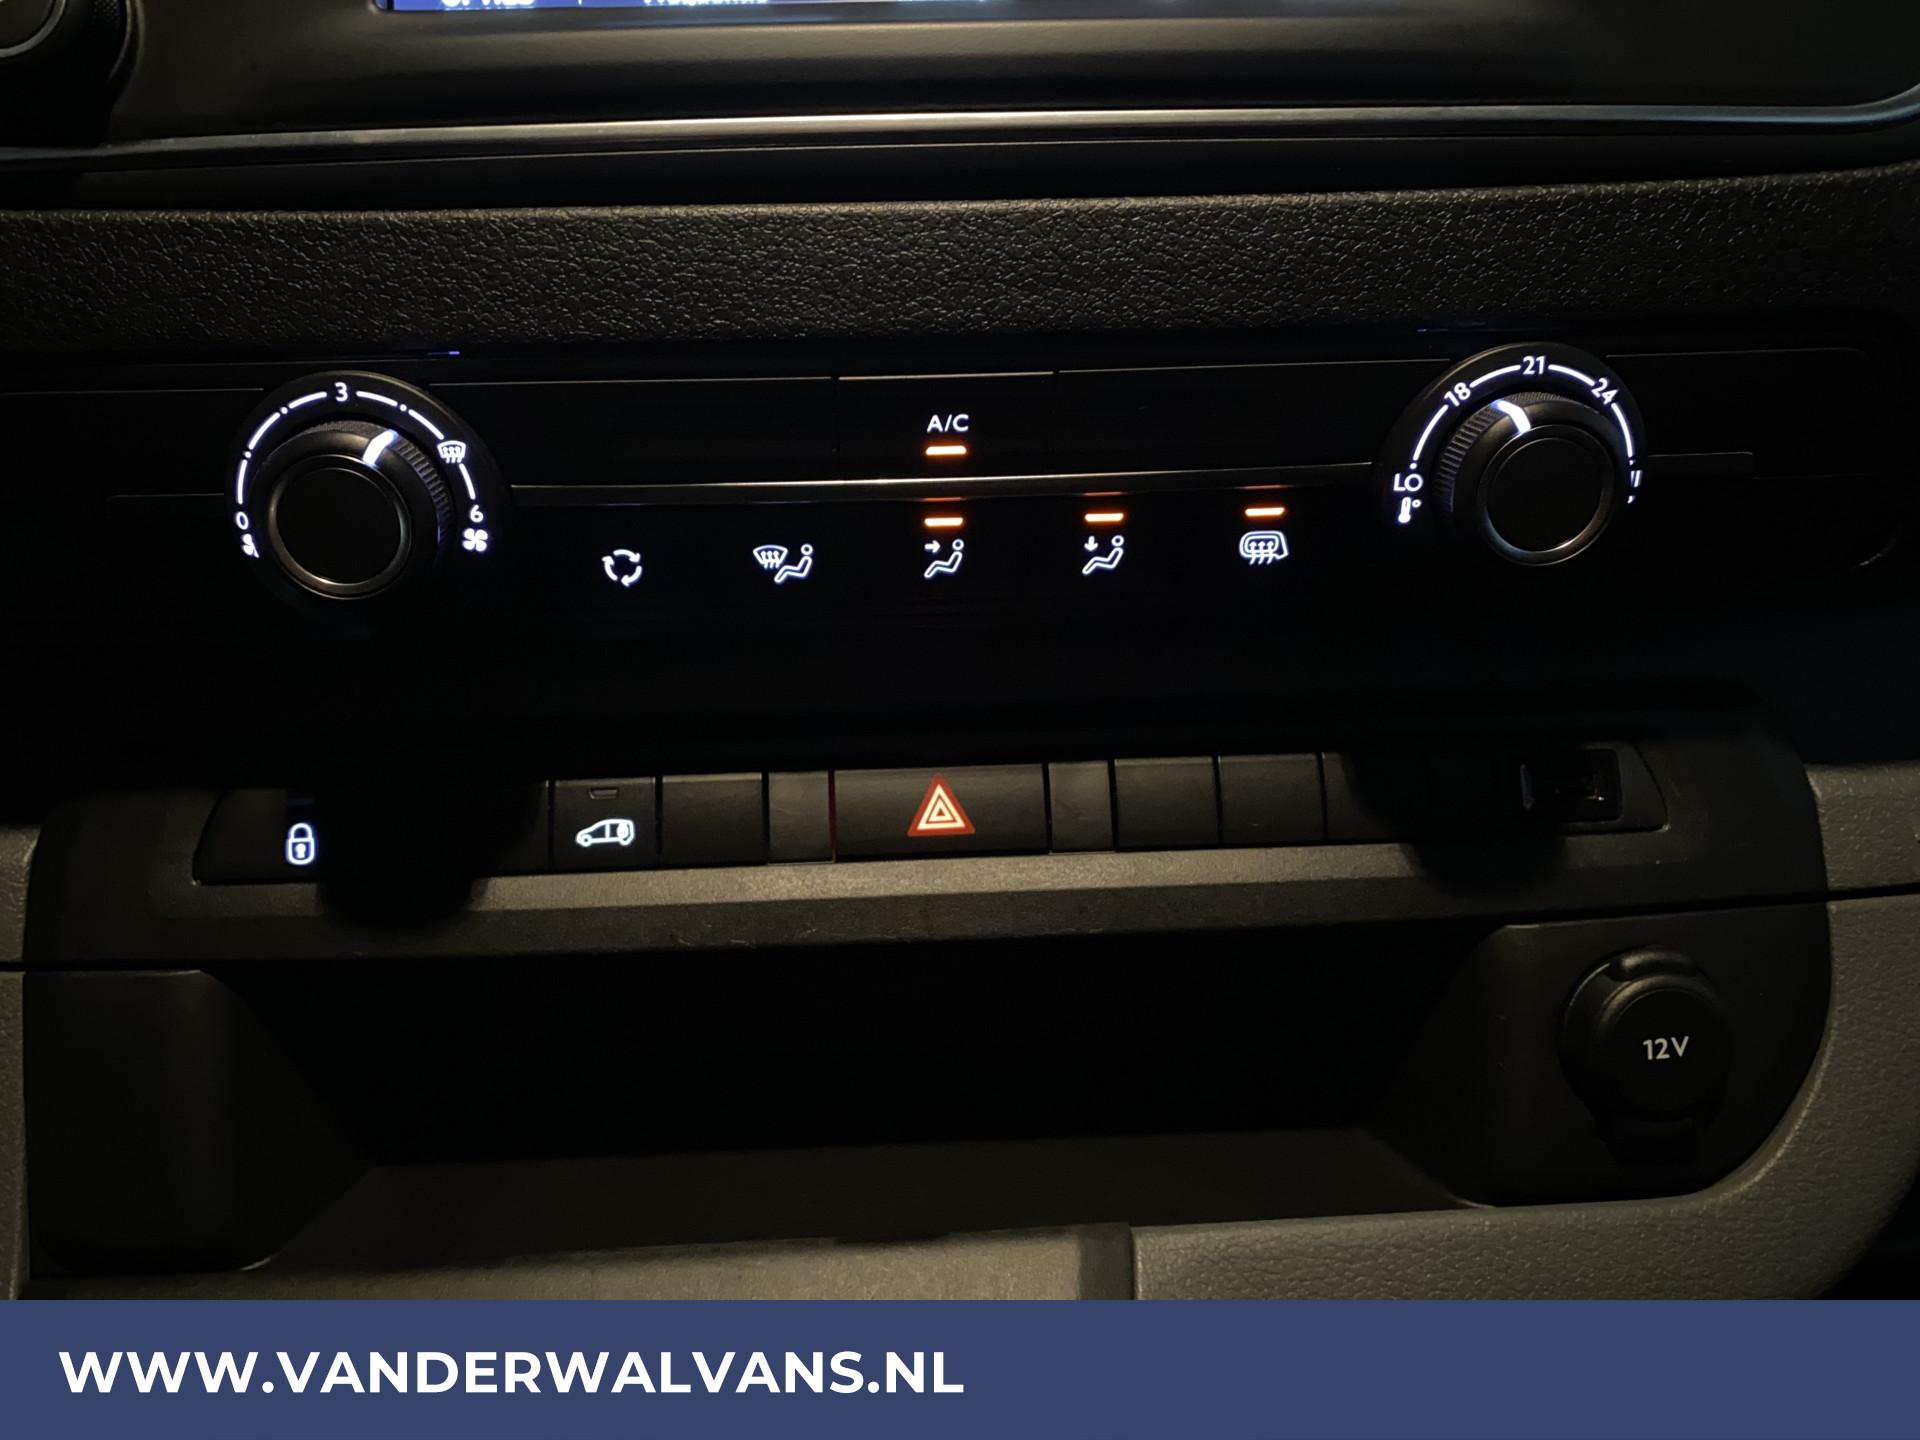 Foto 11 van Opel Vivaro 2.0 CDTI 120pk L2H1 Euro6 Airco | Bumpers in kleur | Navigatie | 2500kg trekhaak